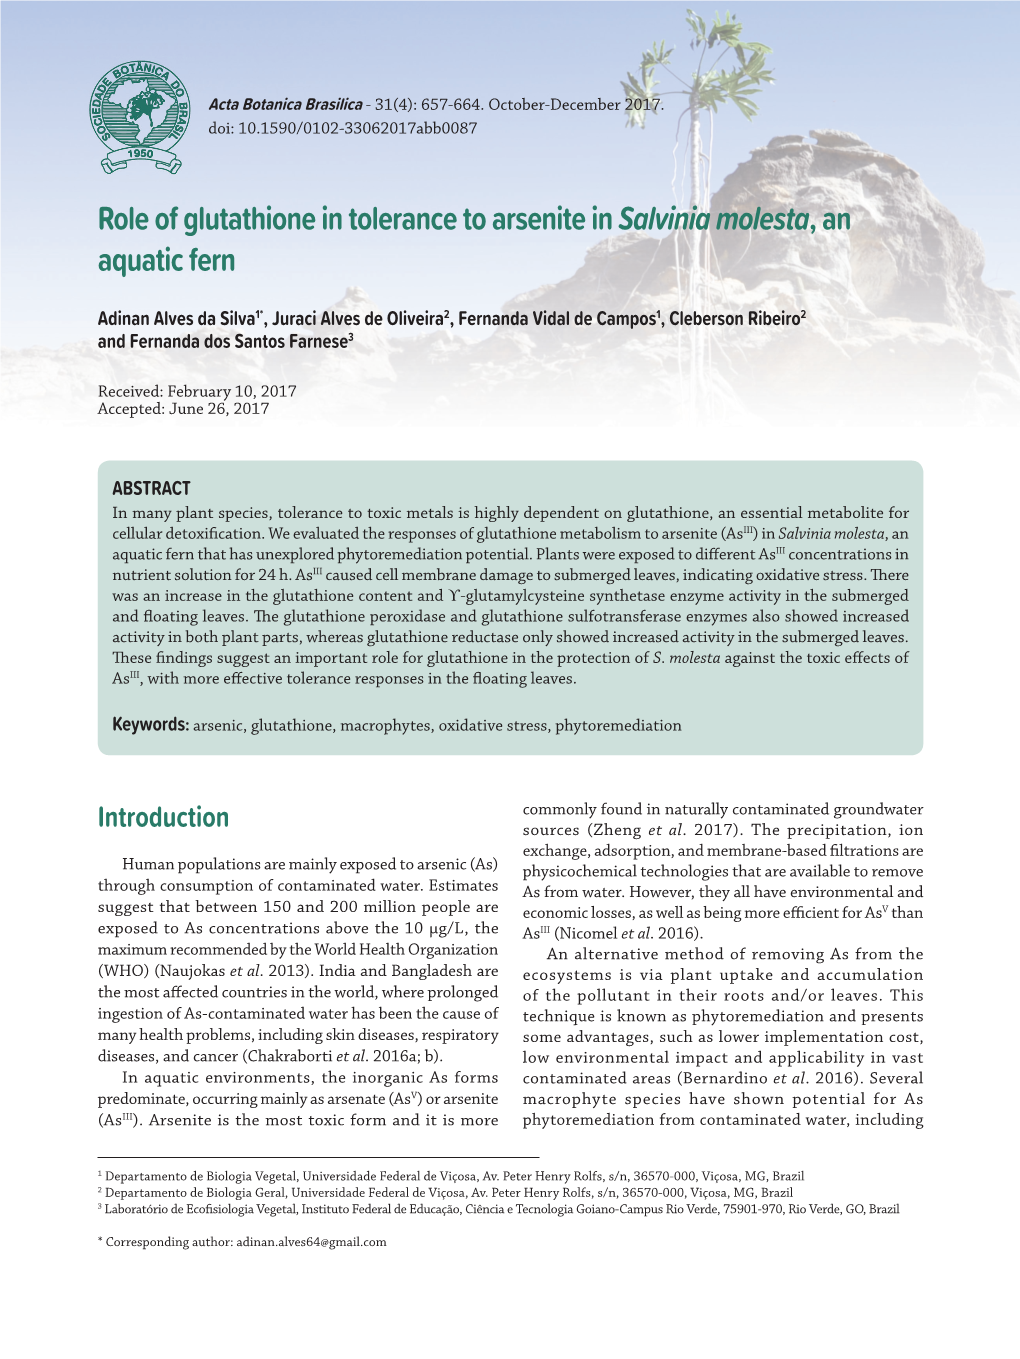 Role of Glutathione in Tolerance to Arsenite in Salvinia Molesta, an Aquatic Fern